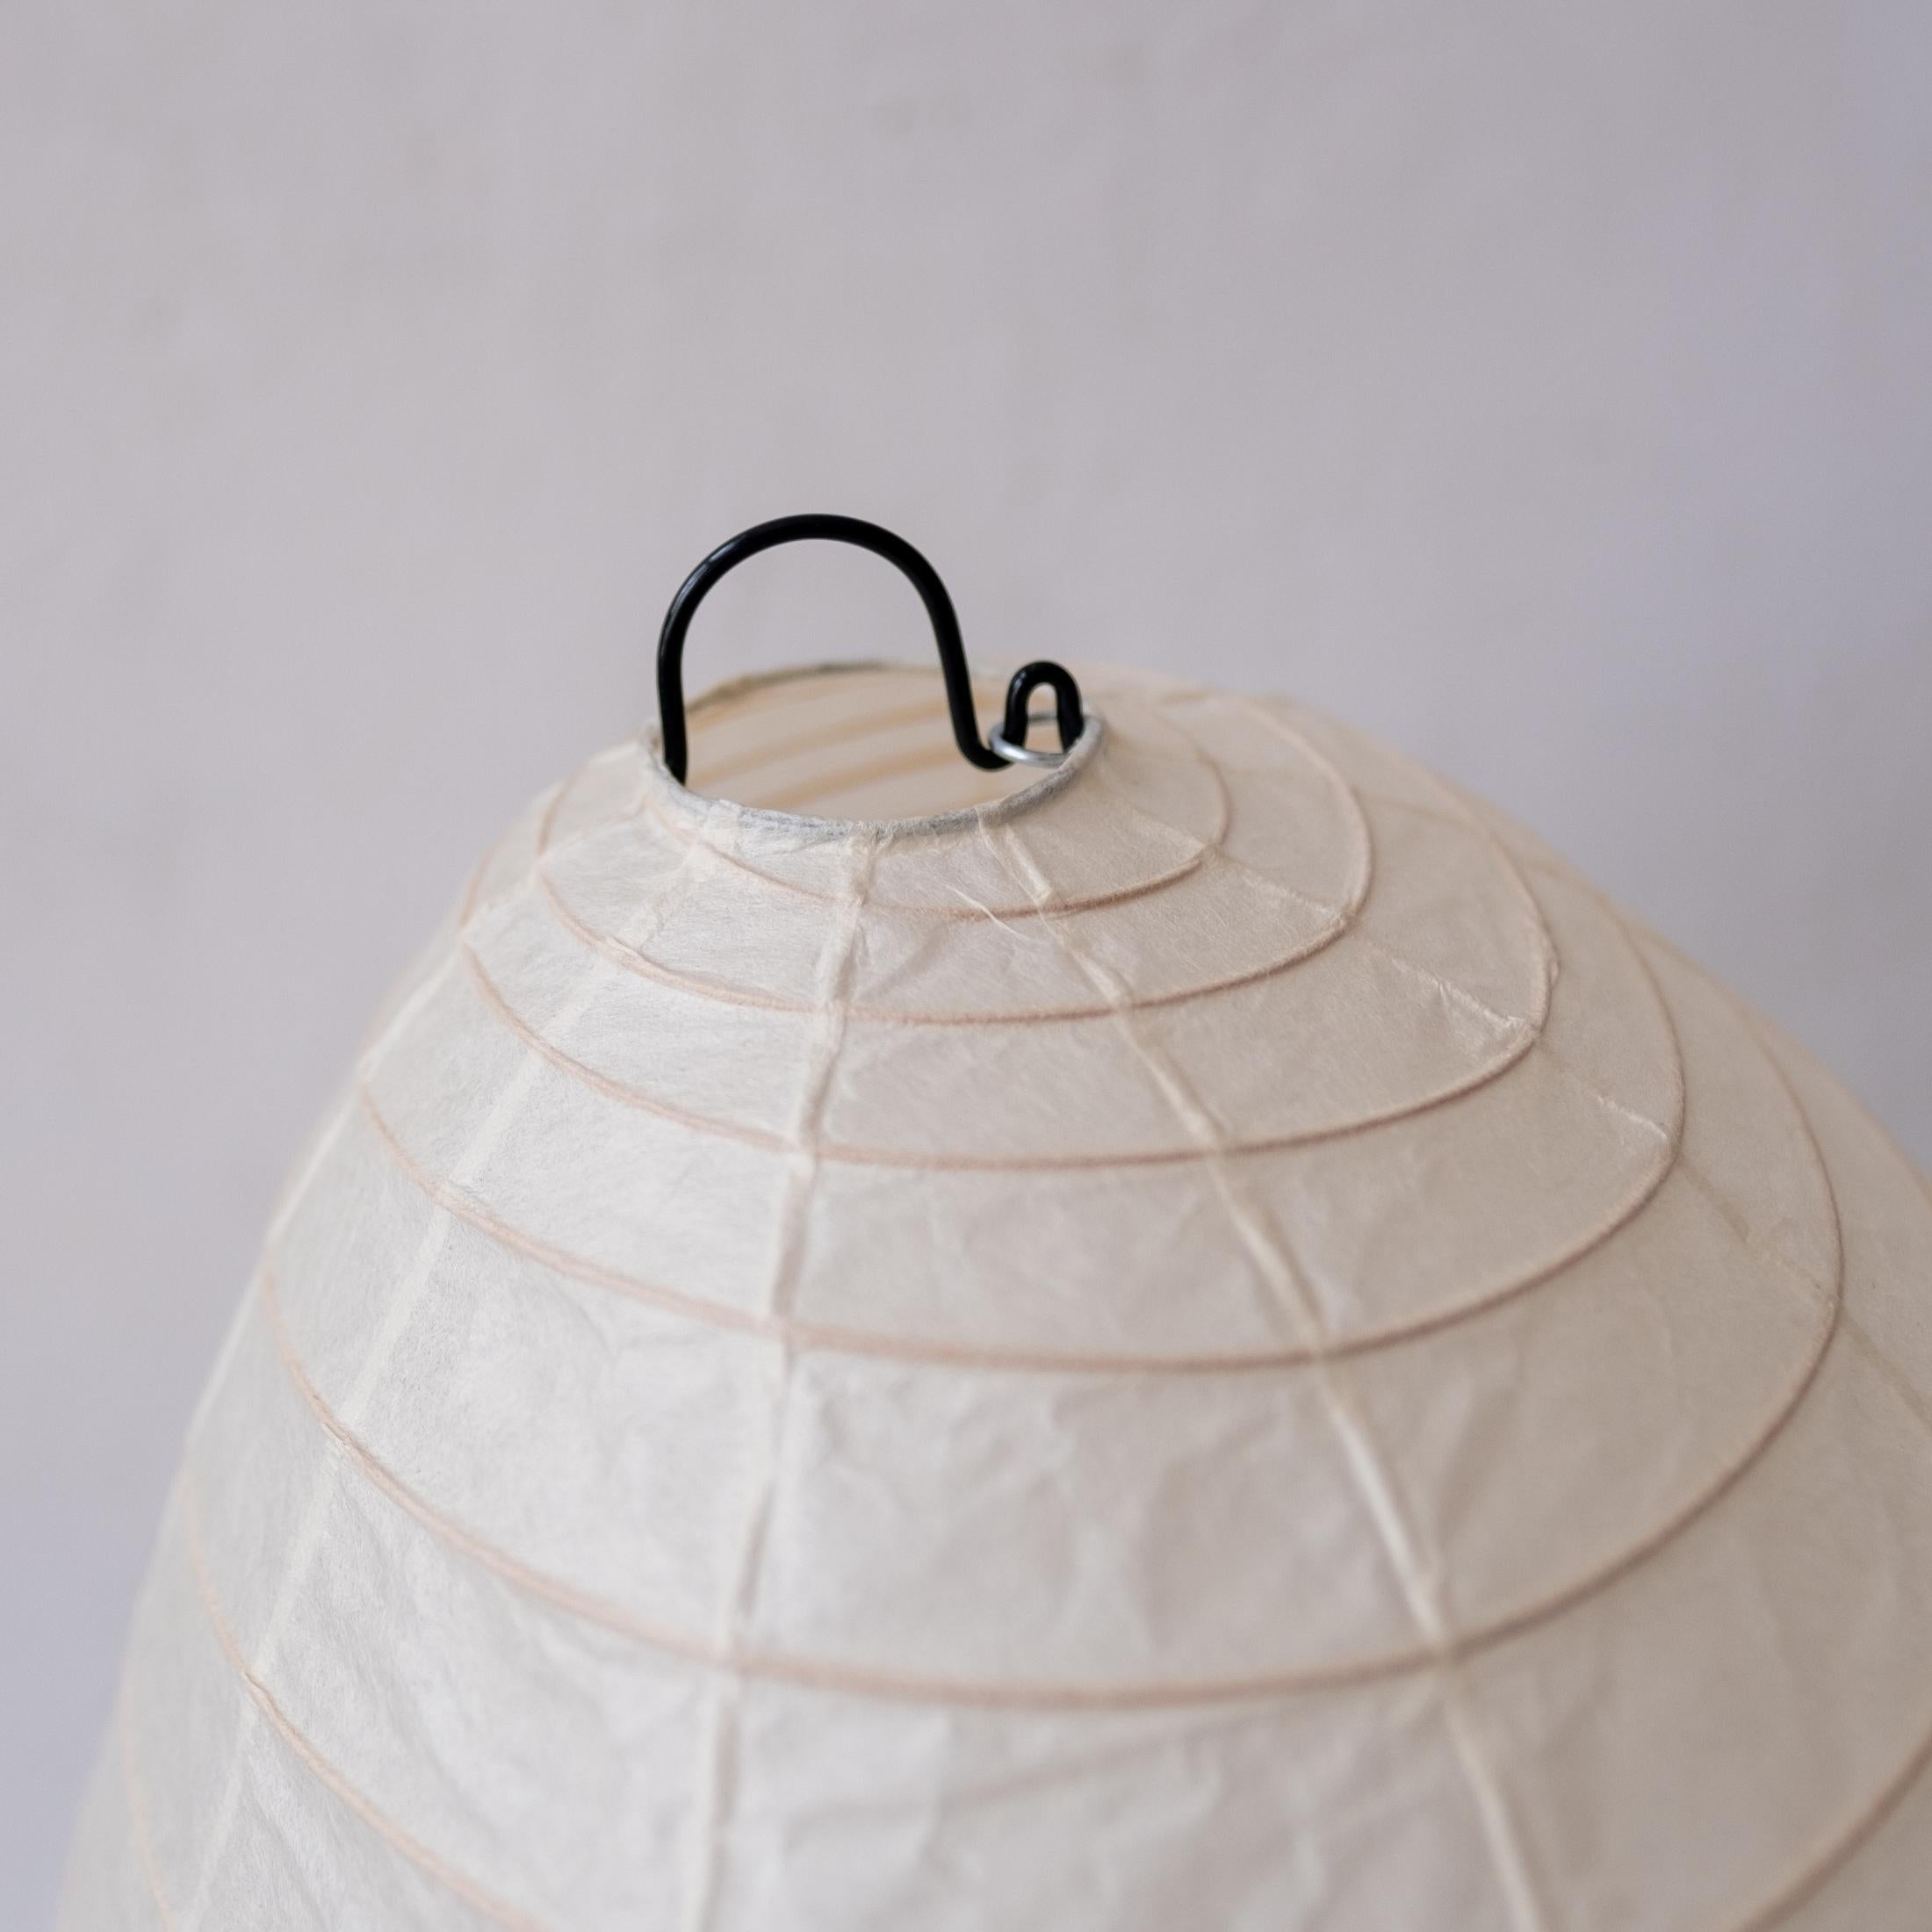 Akari Light Sculpture Lamp 1n by Isamu Noguchi 1